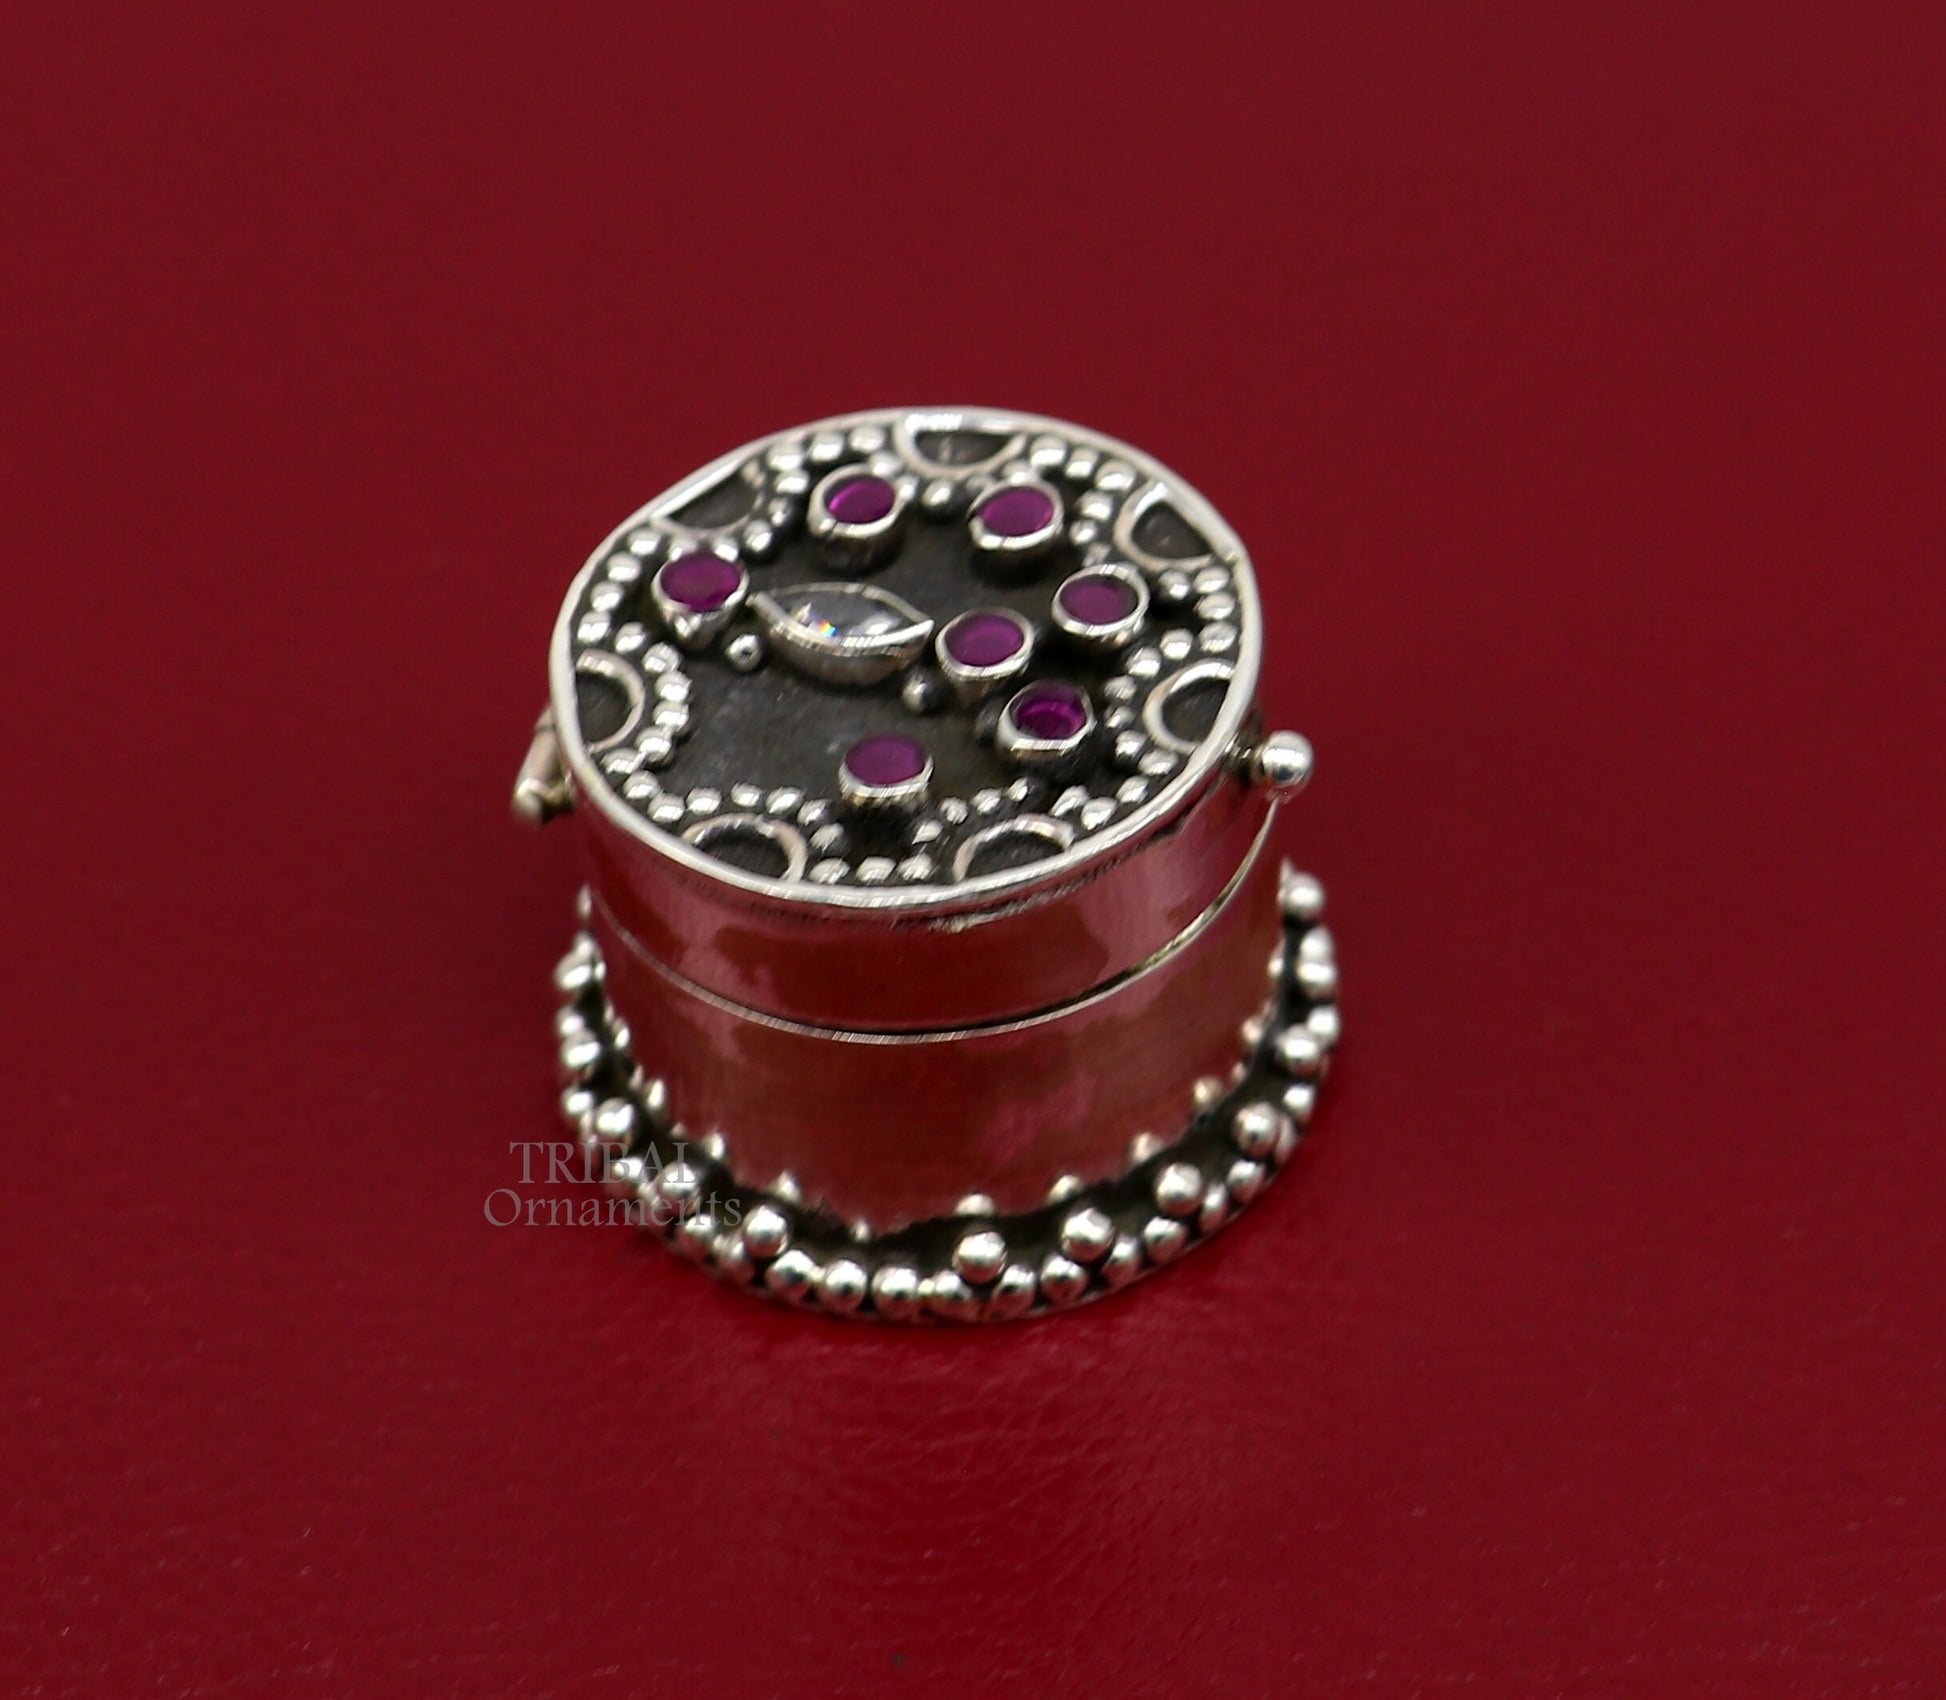 925 sterling silver handcrafted round shape design red stone work trinket box, kajal eyeliner box, Sindur box brides gift silver box stb762 - TRIBAL ORNAMENTS